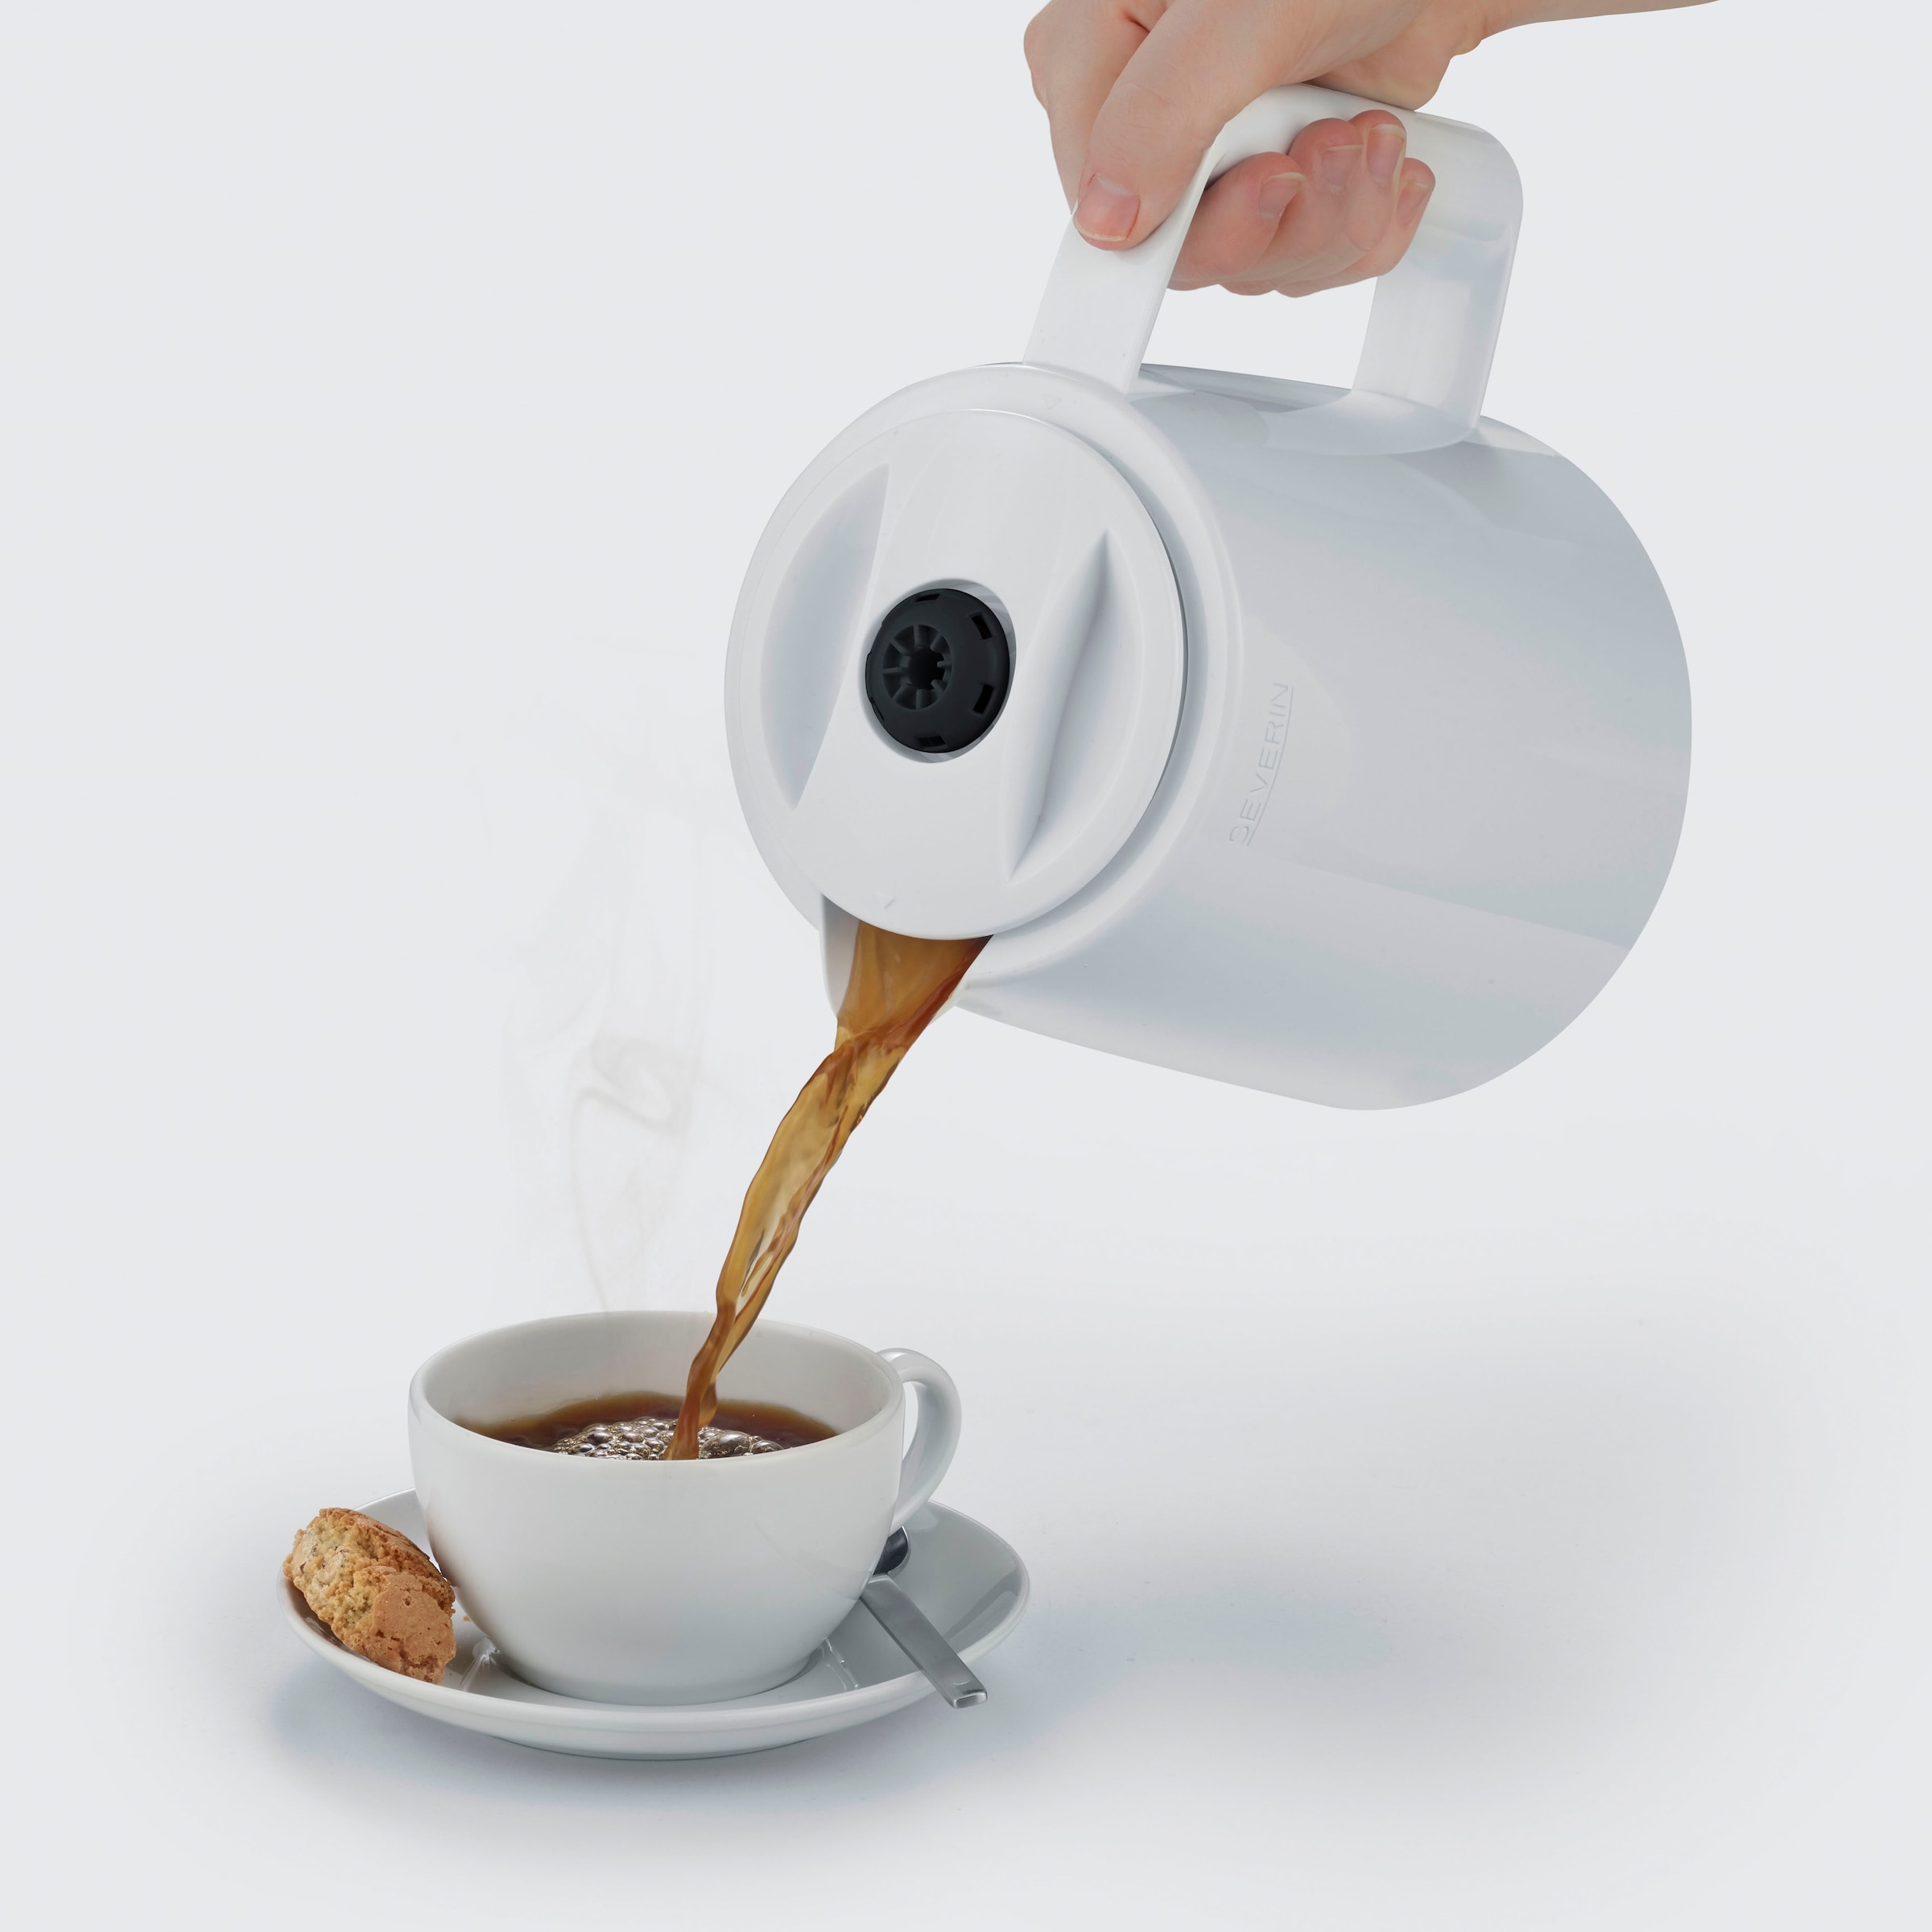 Severin Filterkaffeemaschine »KA 9309 mit 2 Thermokannen«, 1 l Kaffeekanne, Papierfilter, 1x4, zwei Theromkannen für doppelten Kaffeegenuss